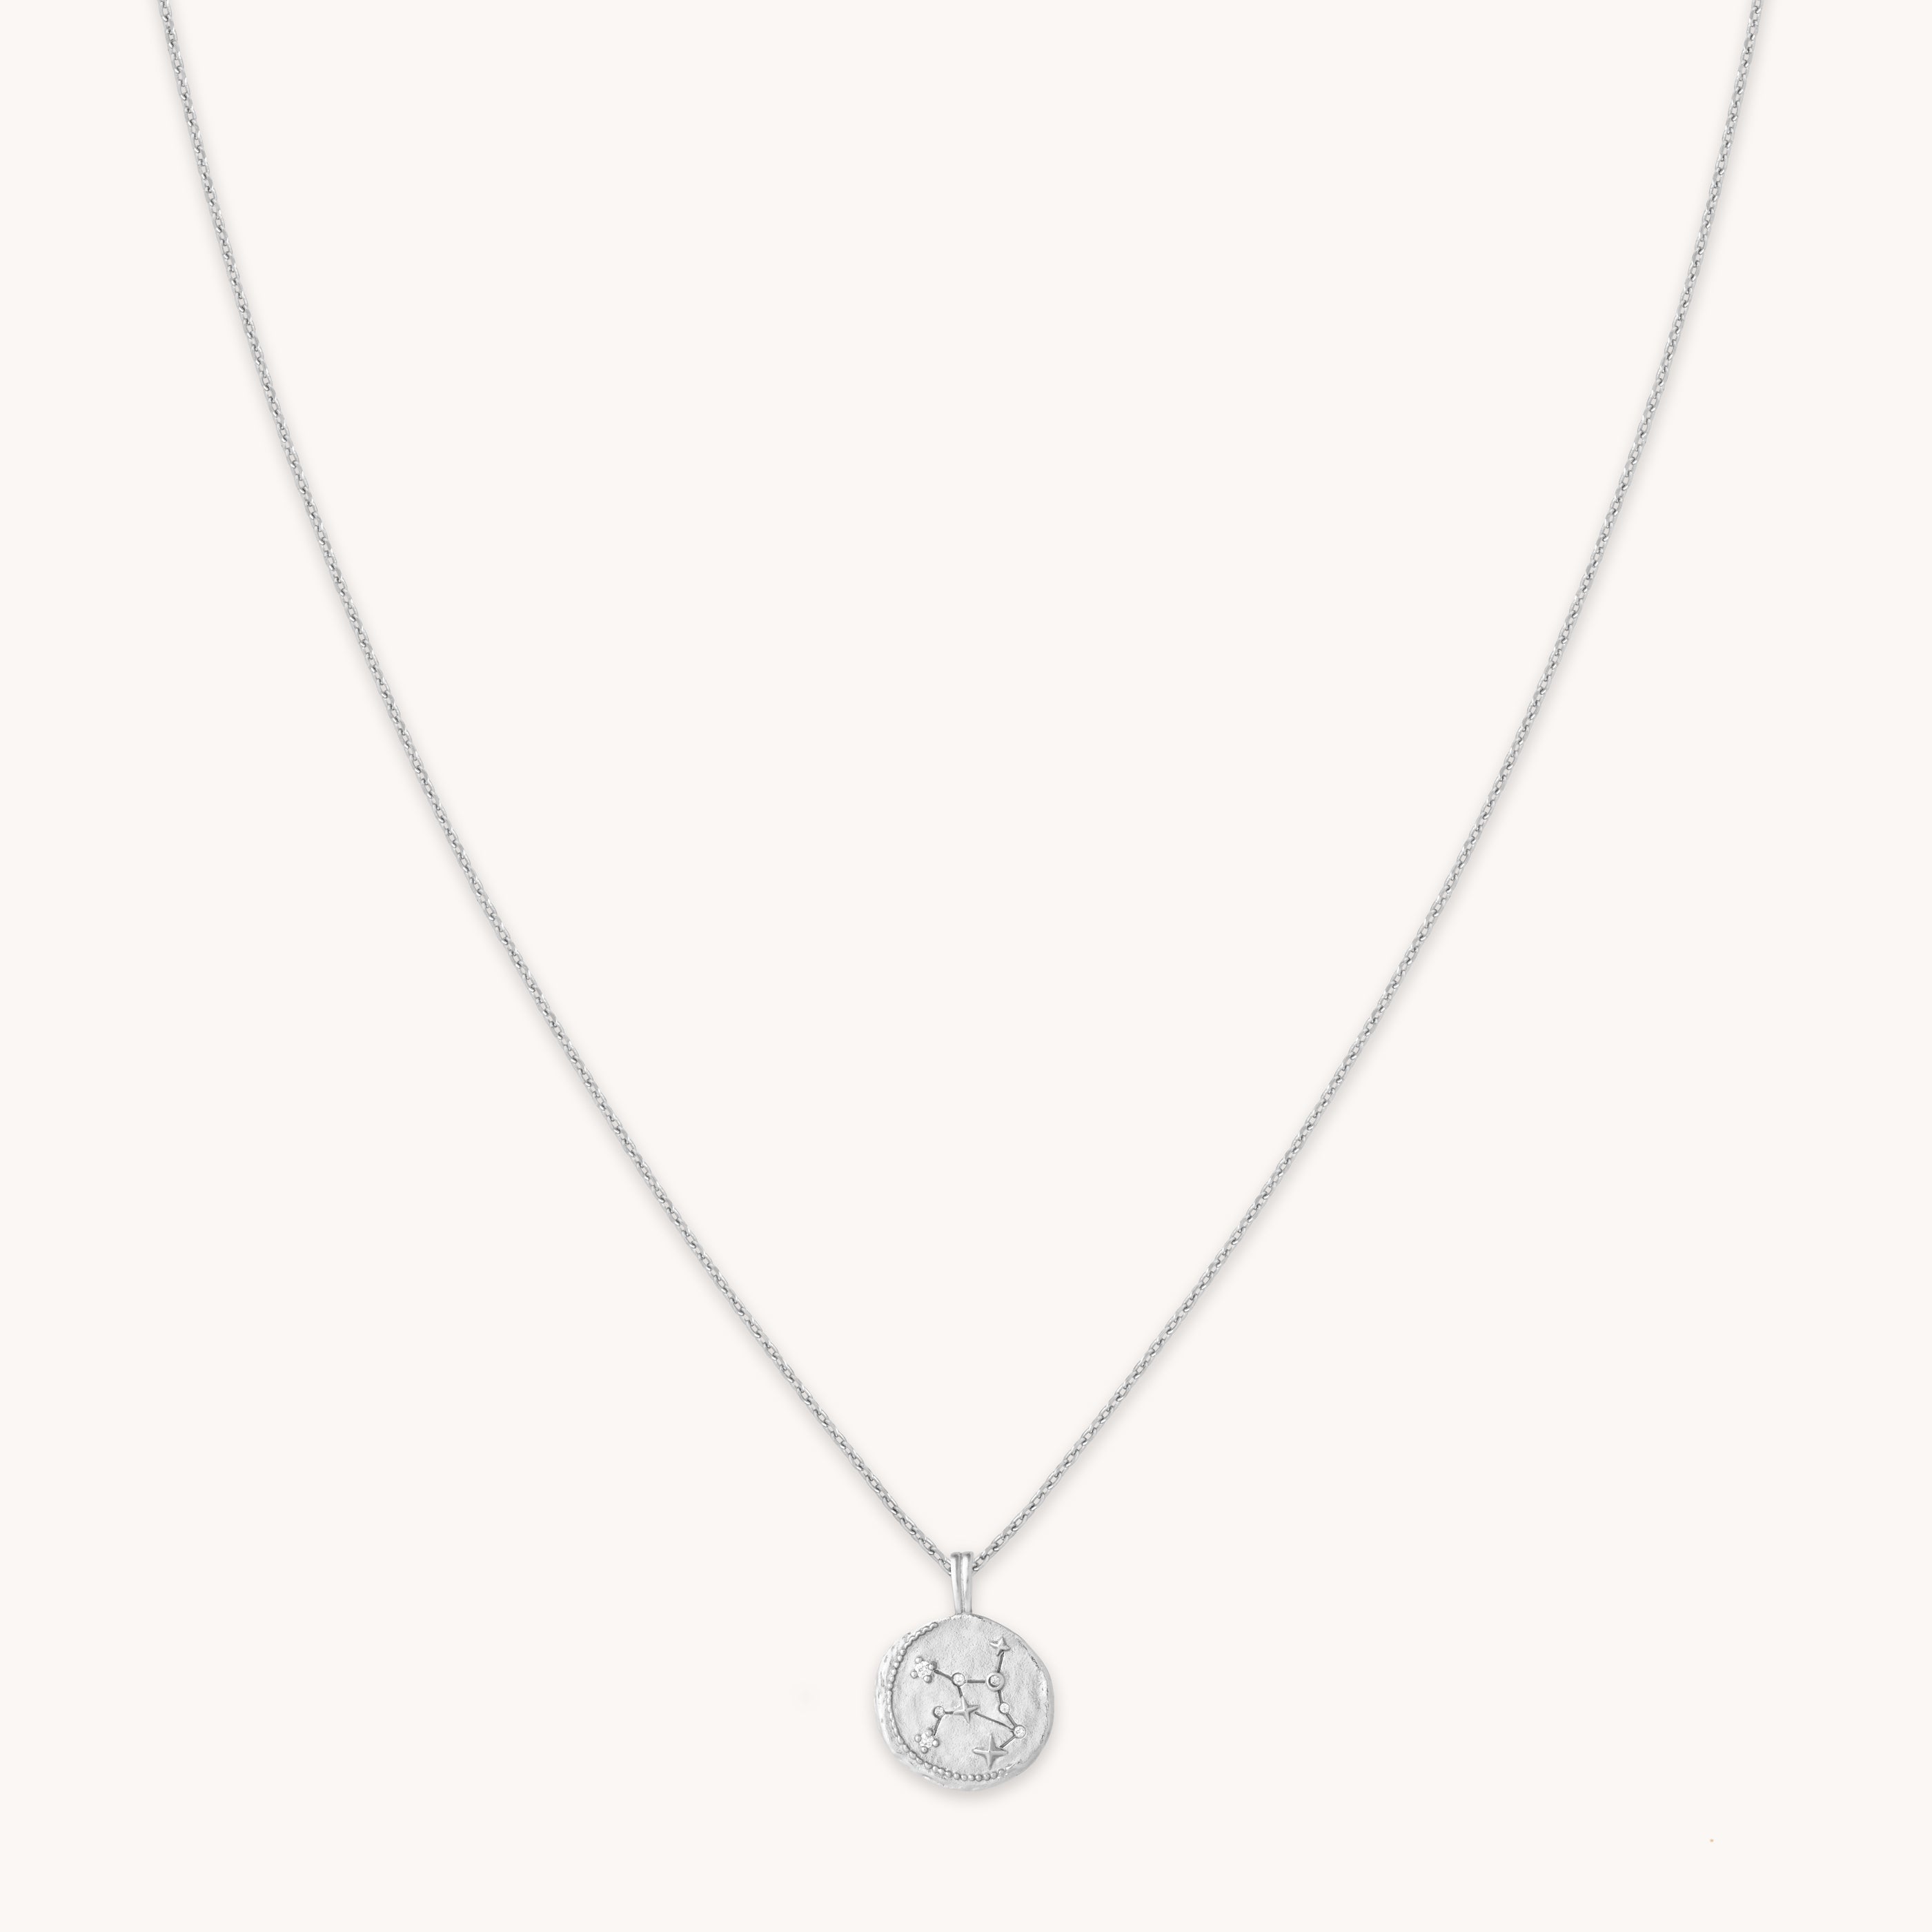 Virgo Zodiac Pendant Necklace in Silver